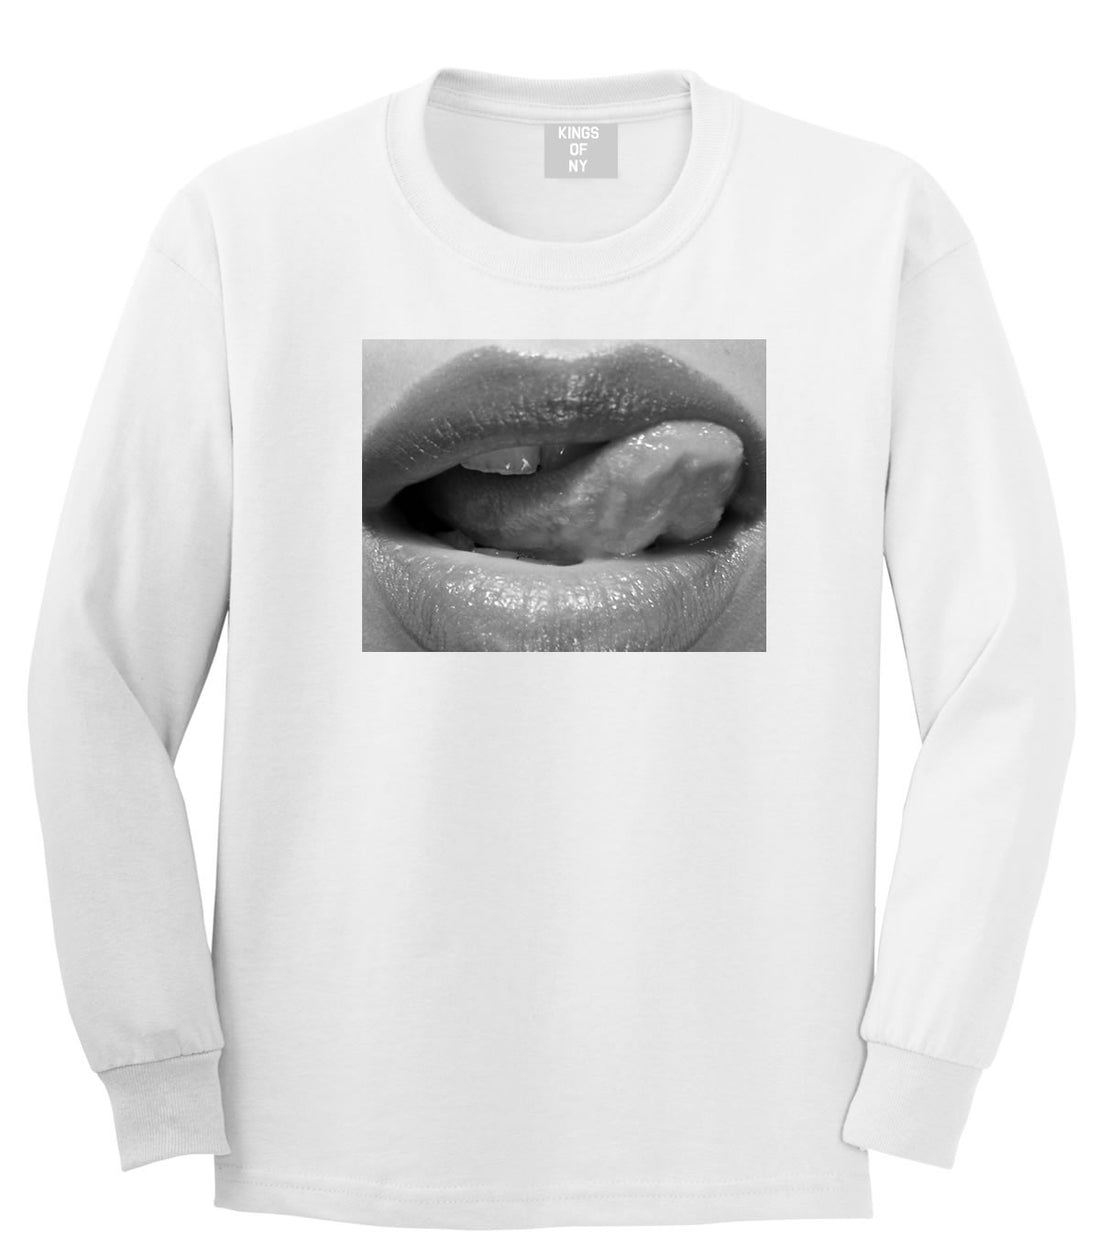 Togue Licking Lips Long Sleeve T-Shirt By Kings Of NY